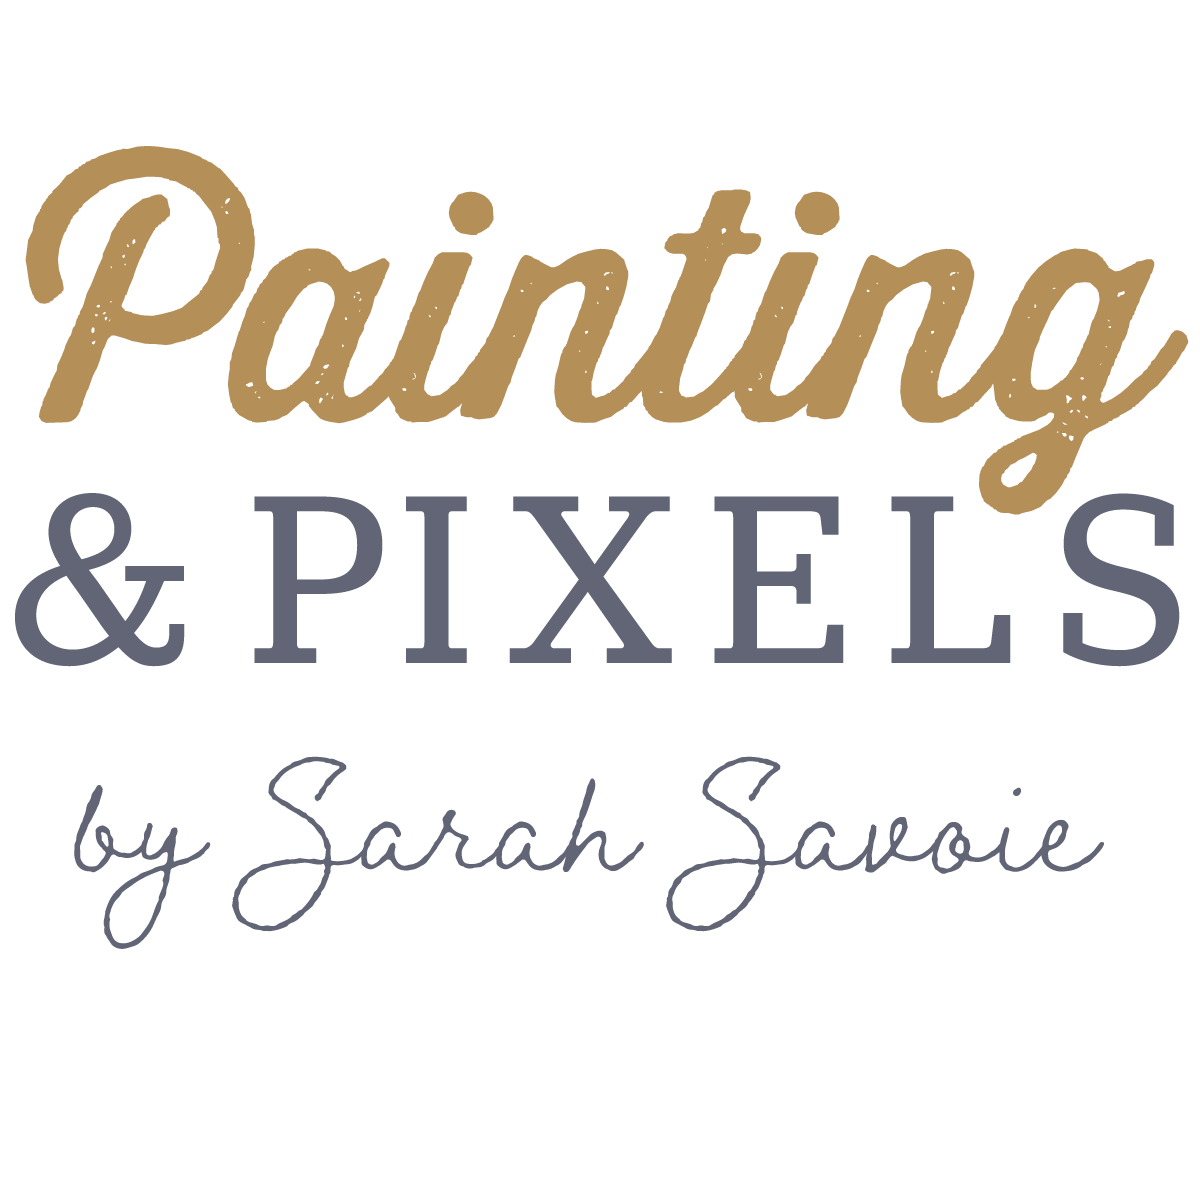 Painting & Pixels by Sarah Savoie